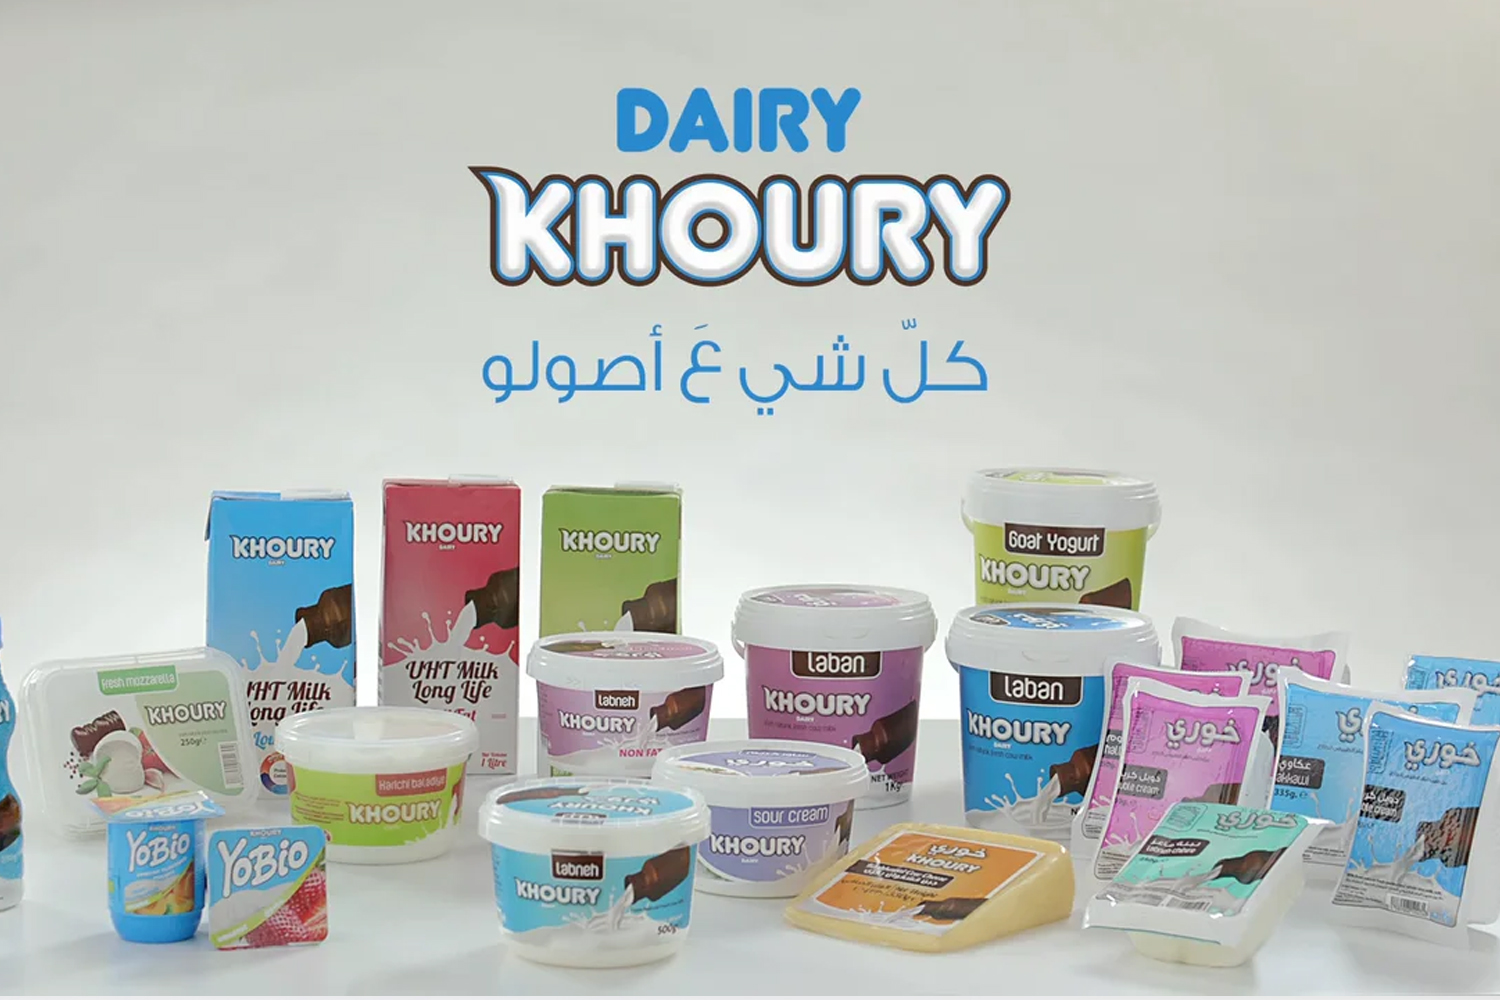 digi-web-dairy-khoury-main-blockchain-products-0